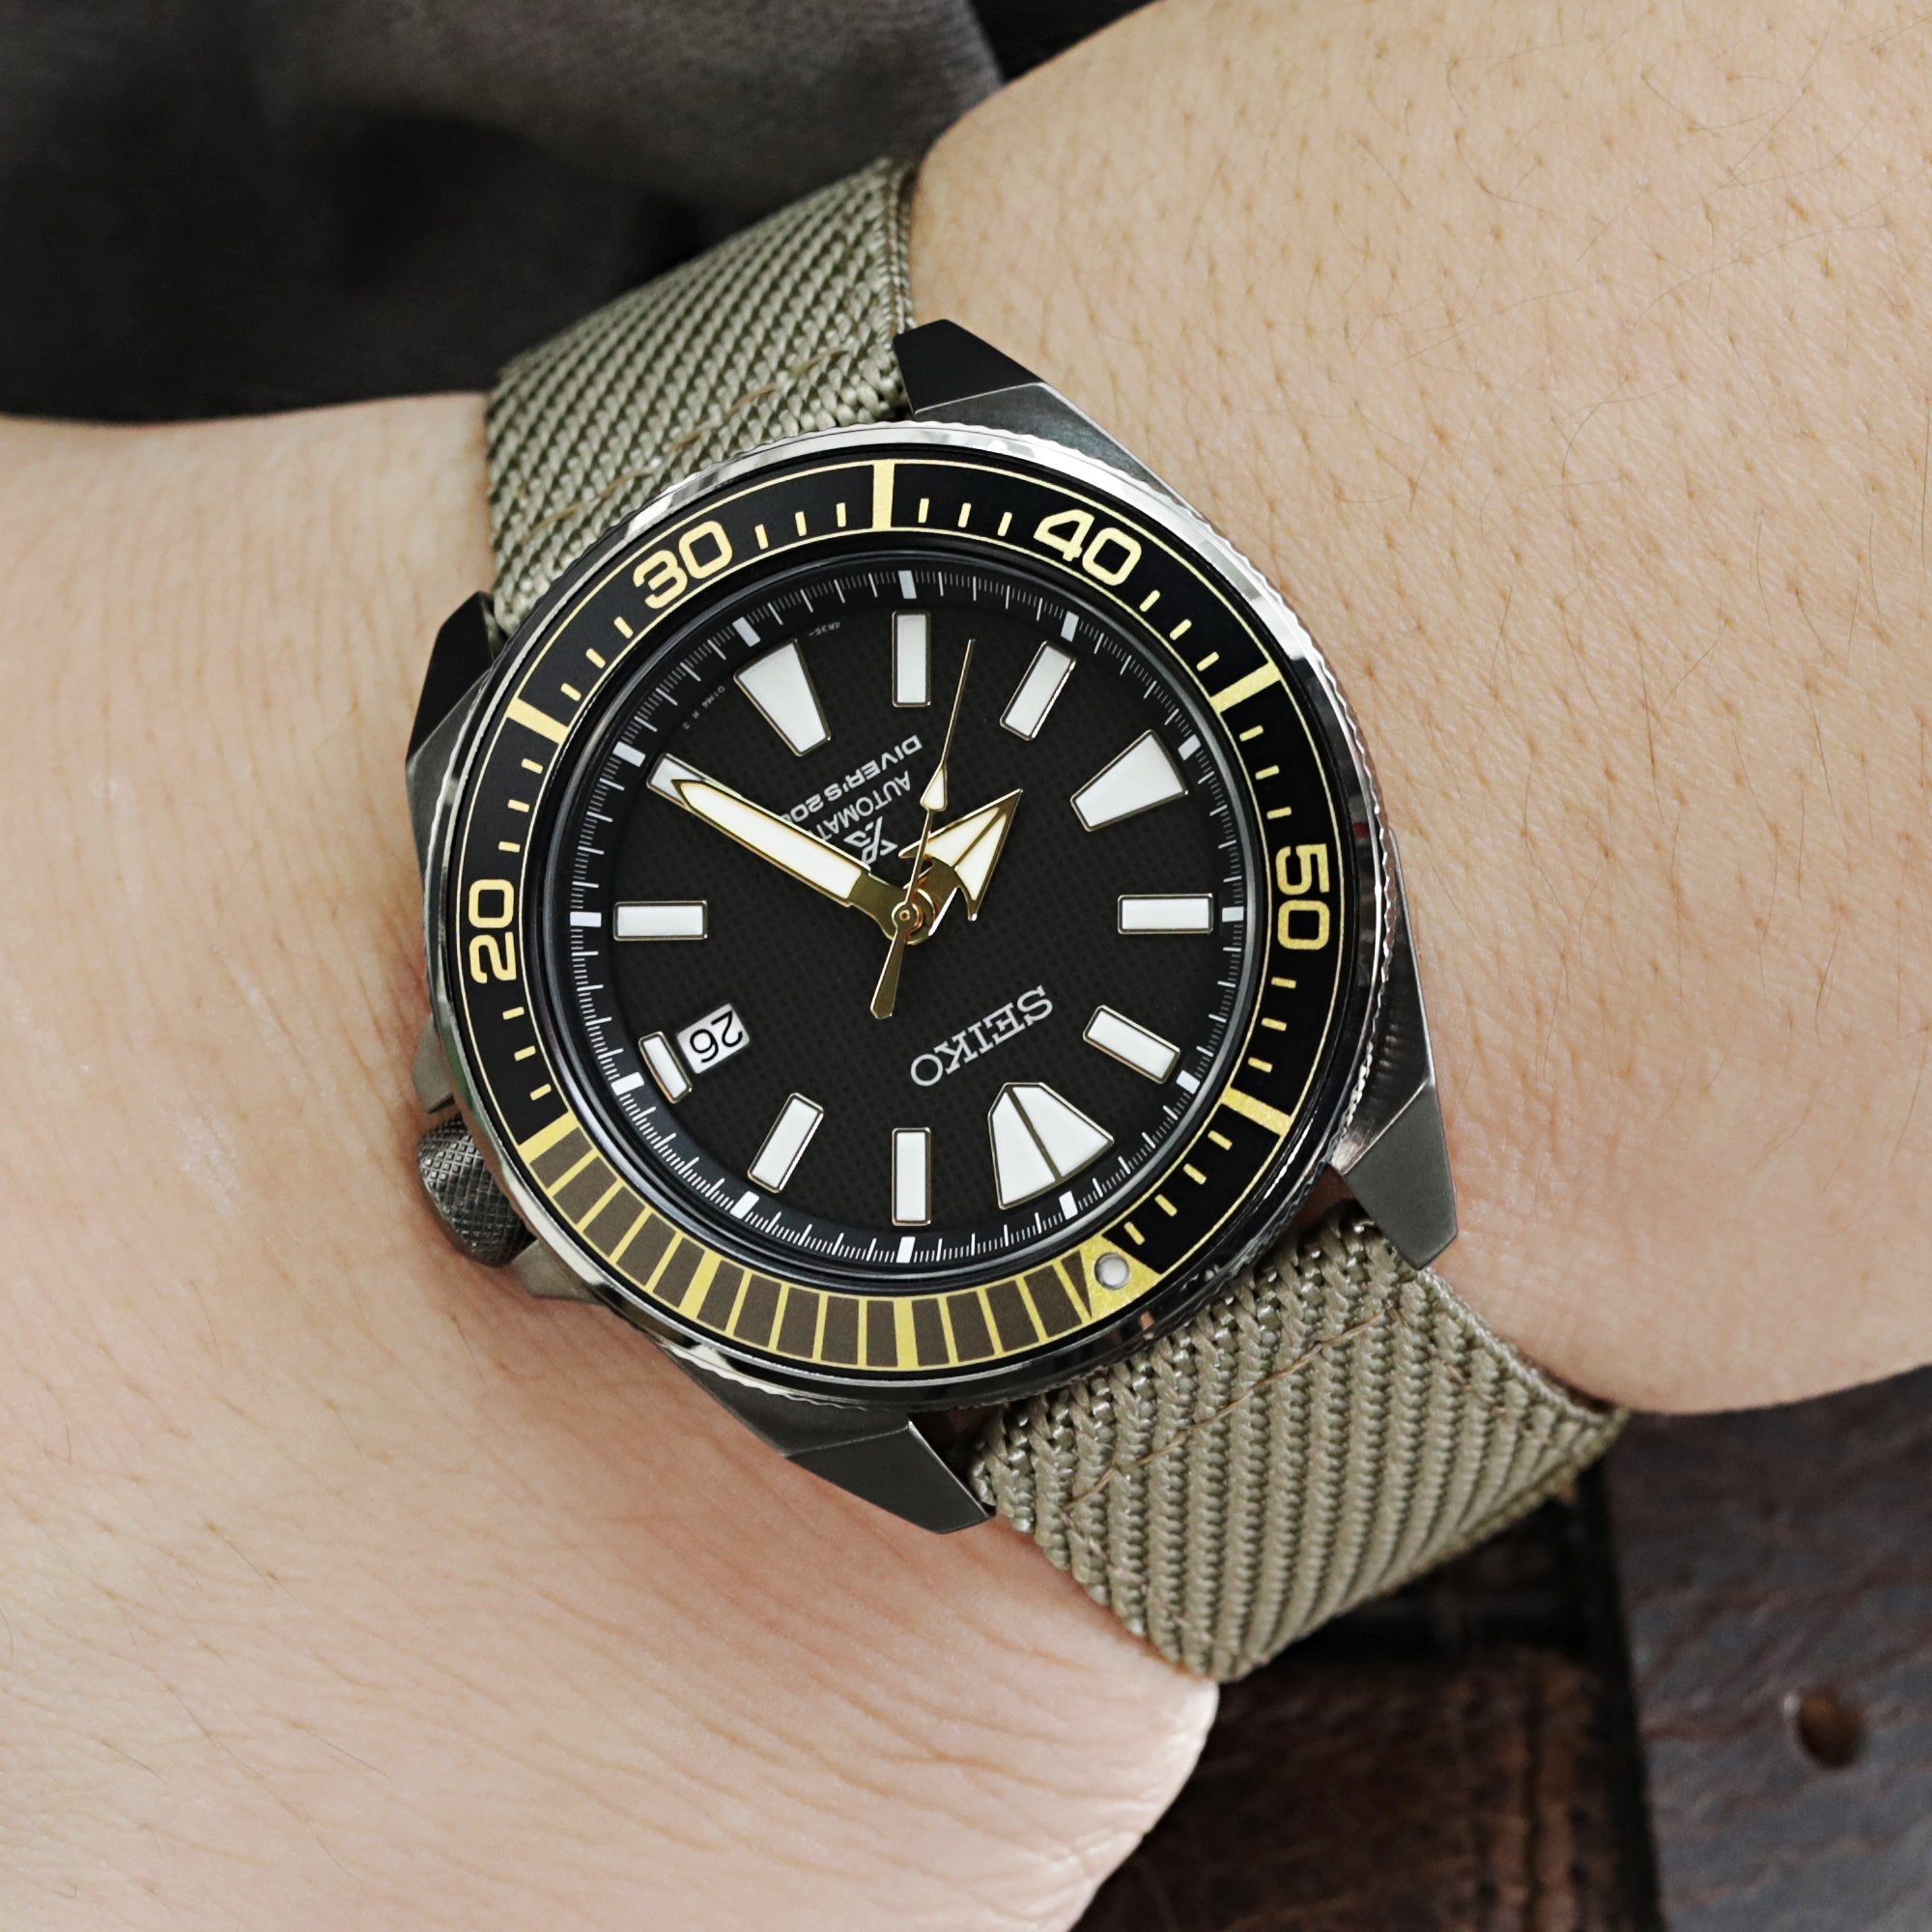 Seiko Samurai Prospex Automatic Dive Watch SRPB55K1 PVD Black  Strapcode Watch Bands